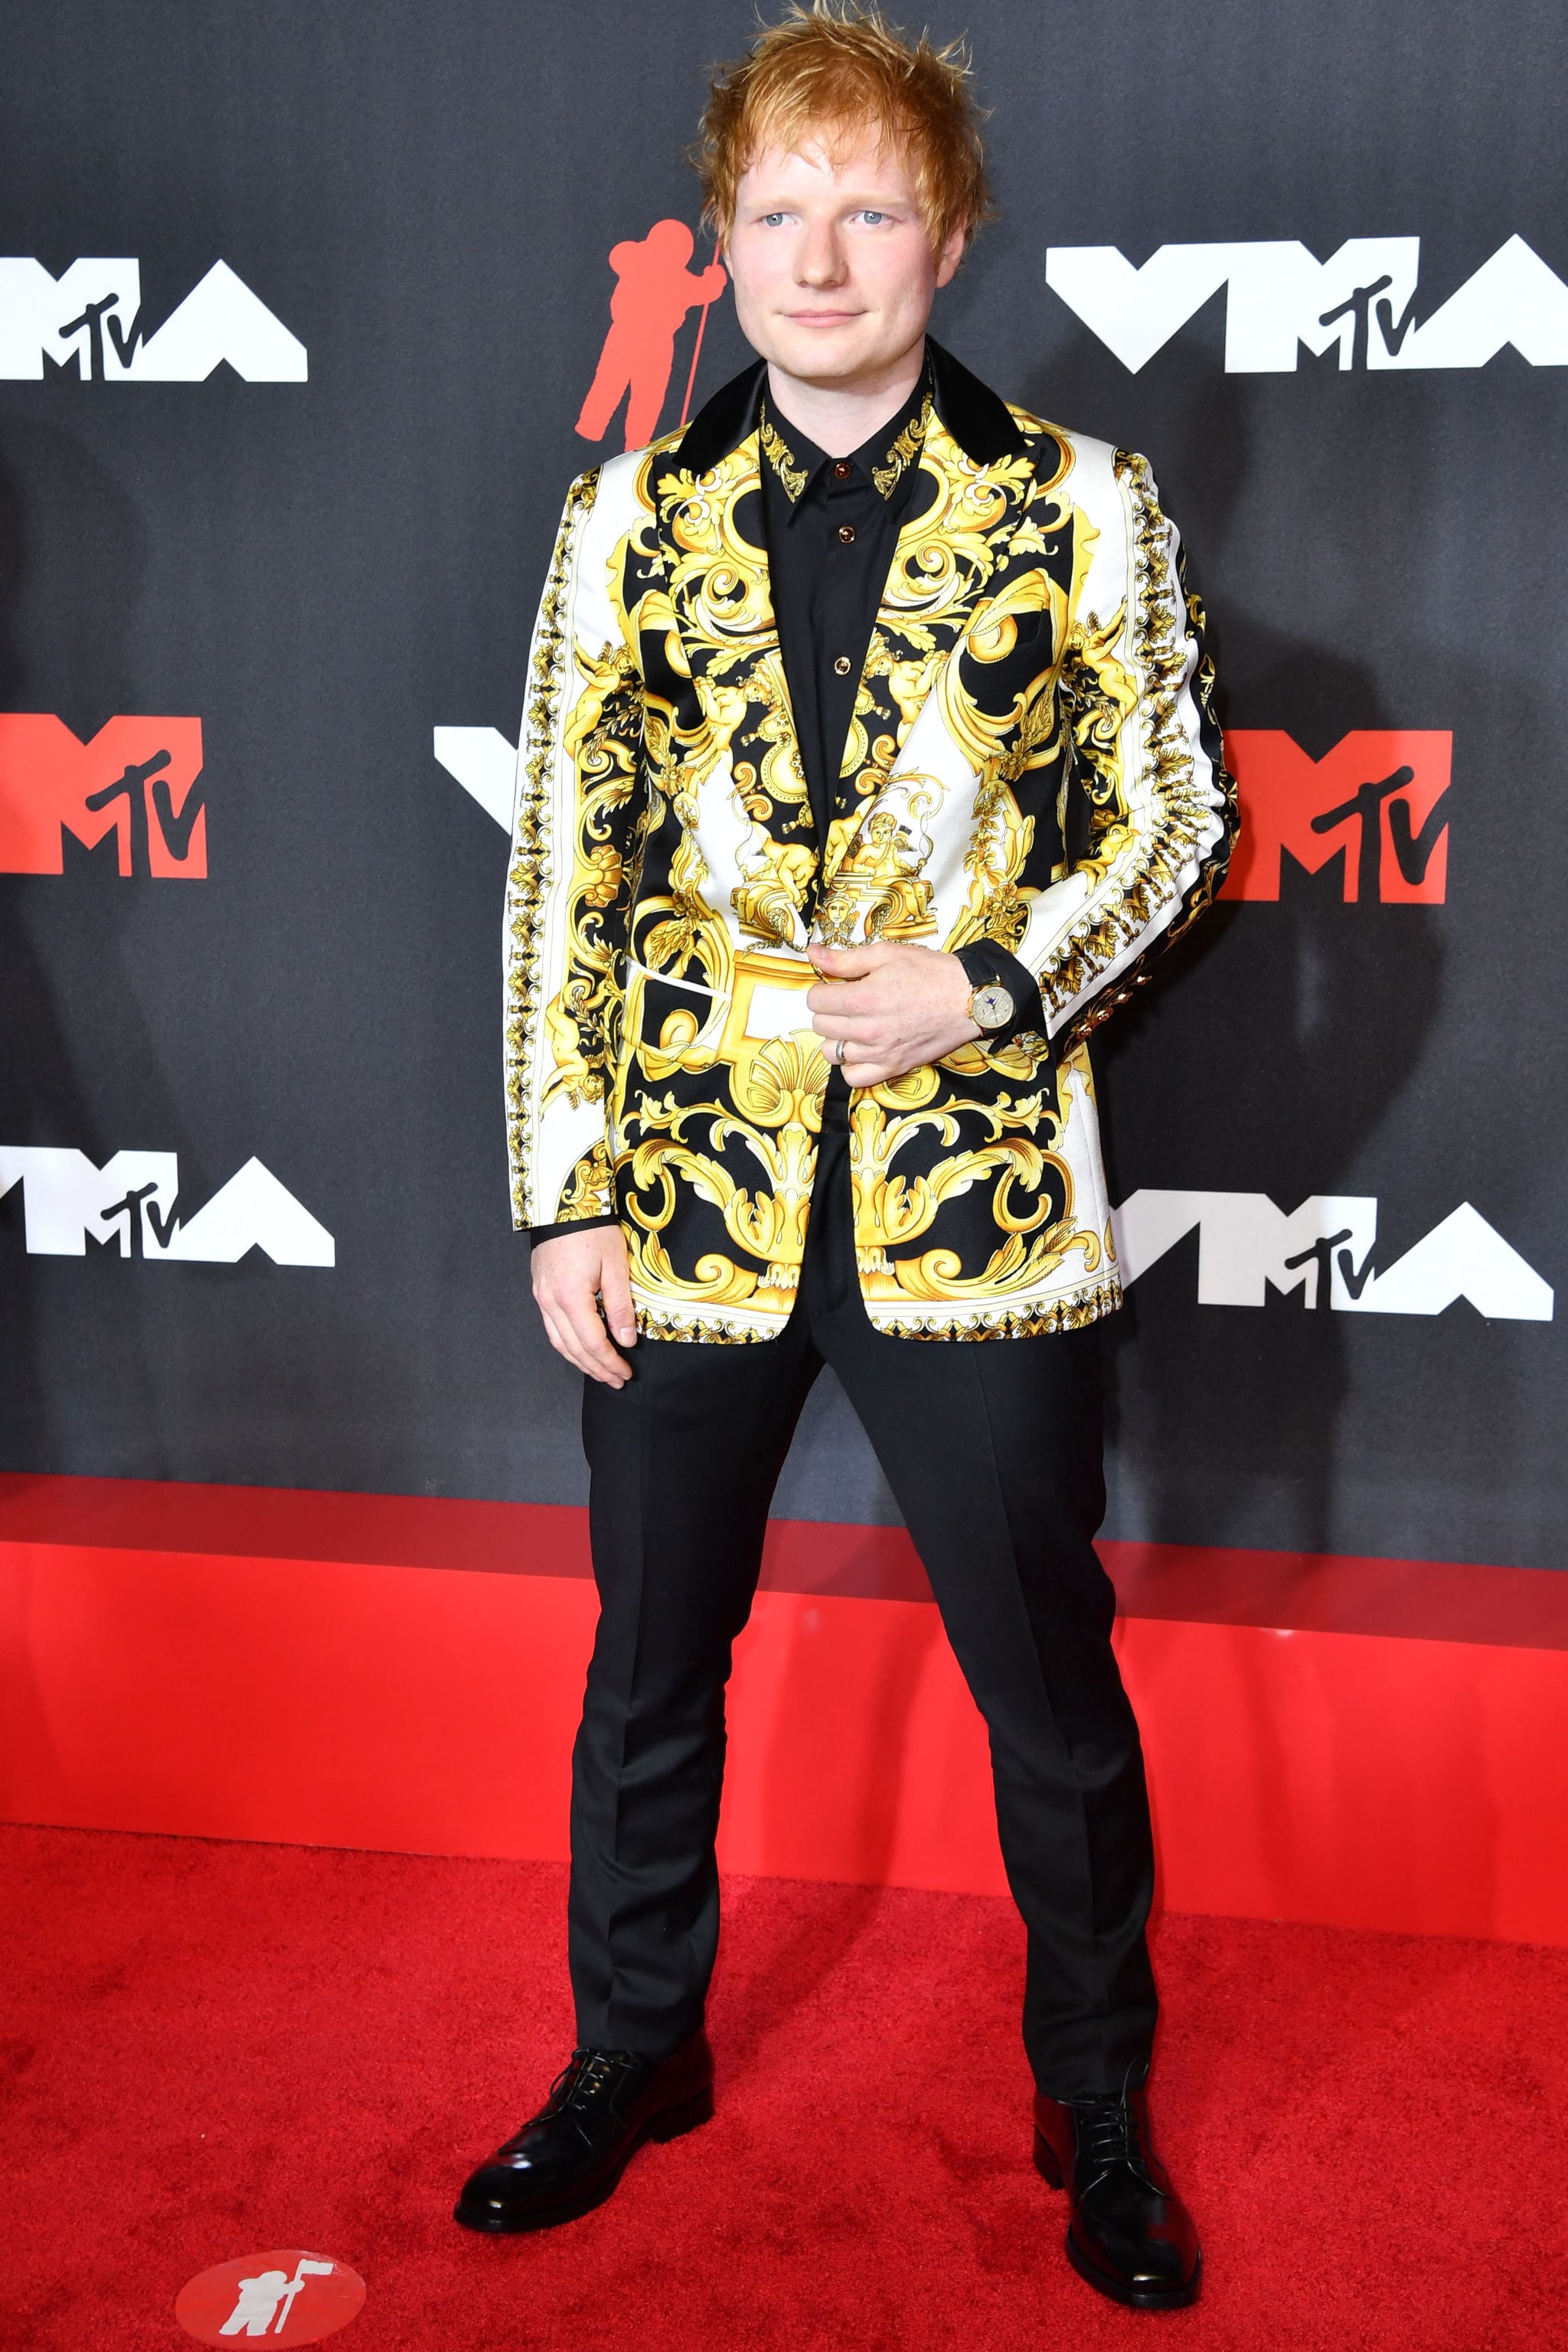 Ed Sheeran at the 2021 MTV VMAs | The MTV VMAs Red Carpet Is So Upbeat, the  Fashion Alone Will Make You Dance | POPSUGAR Fashion Photo 32